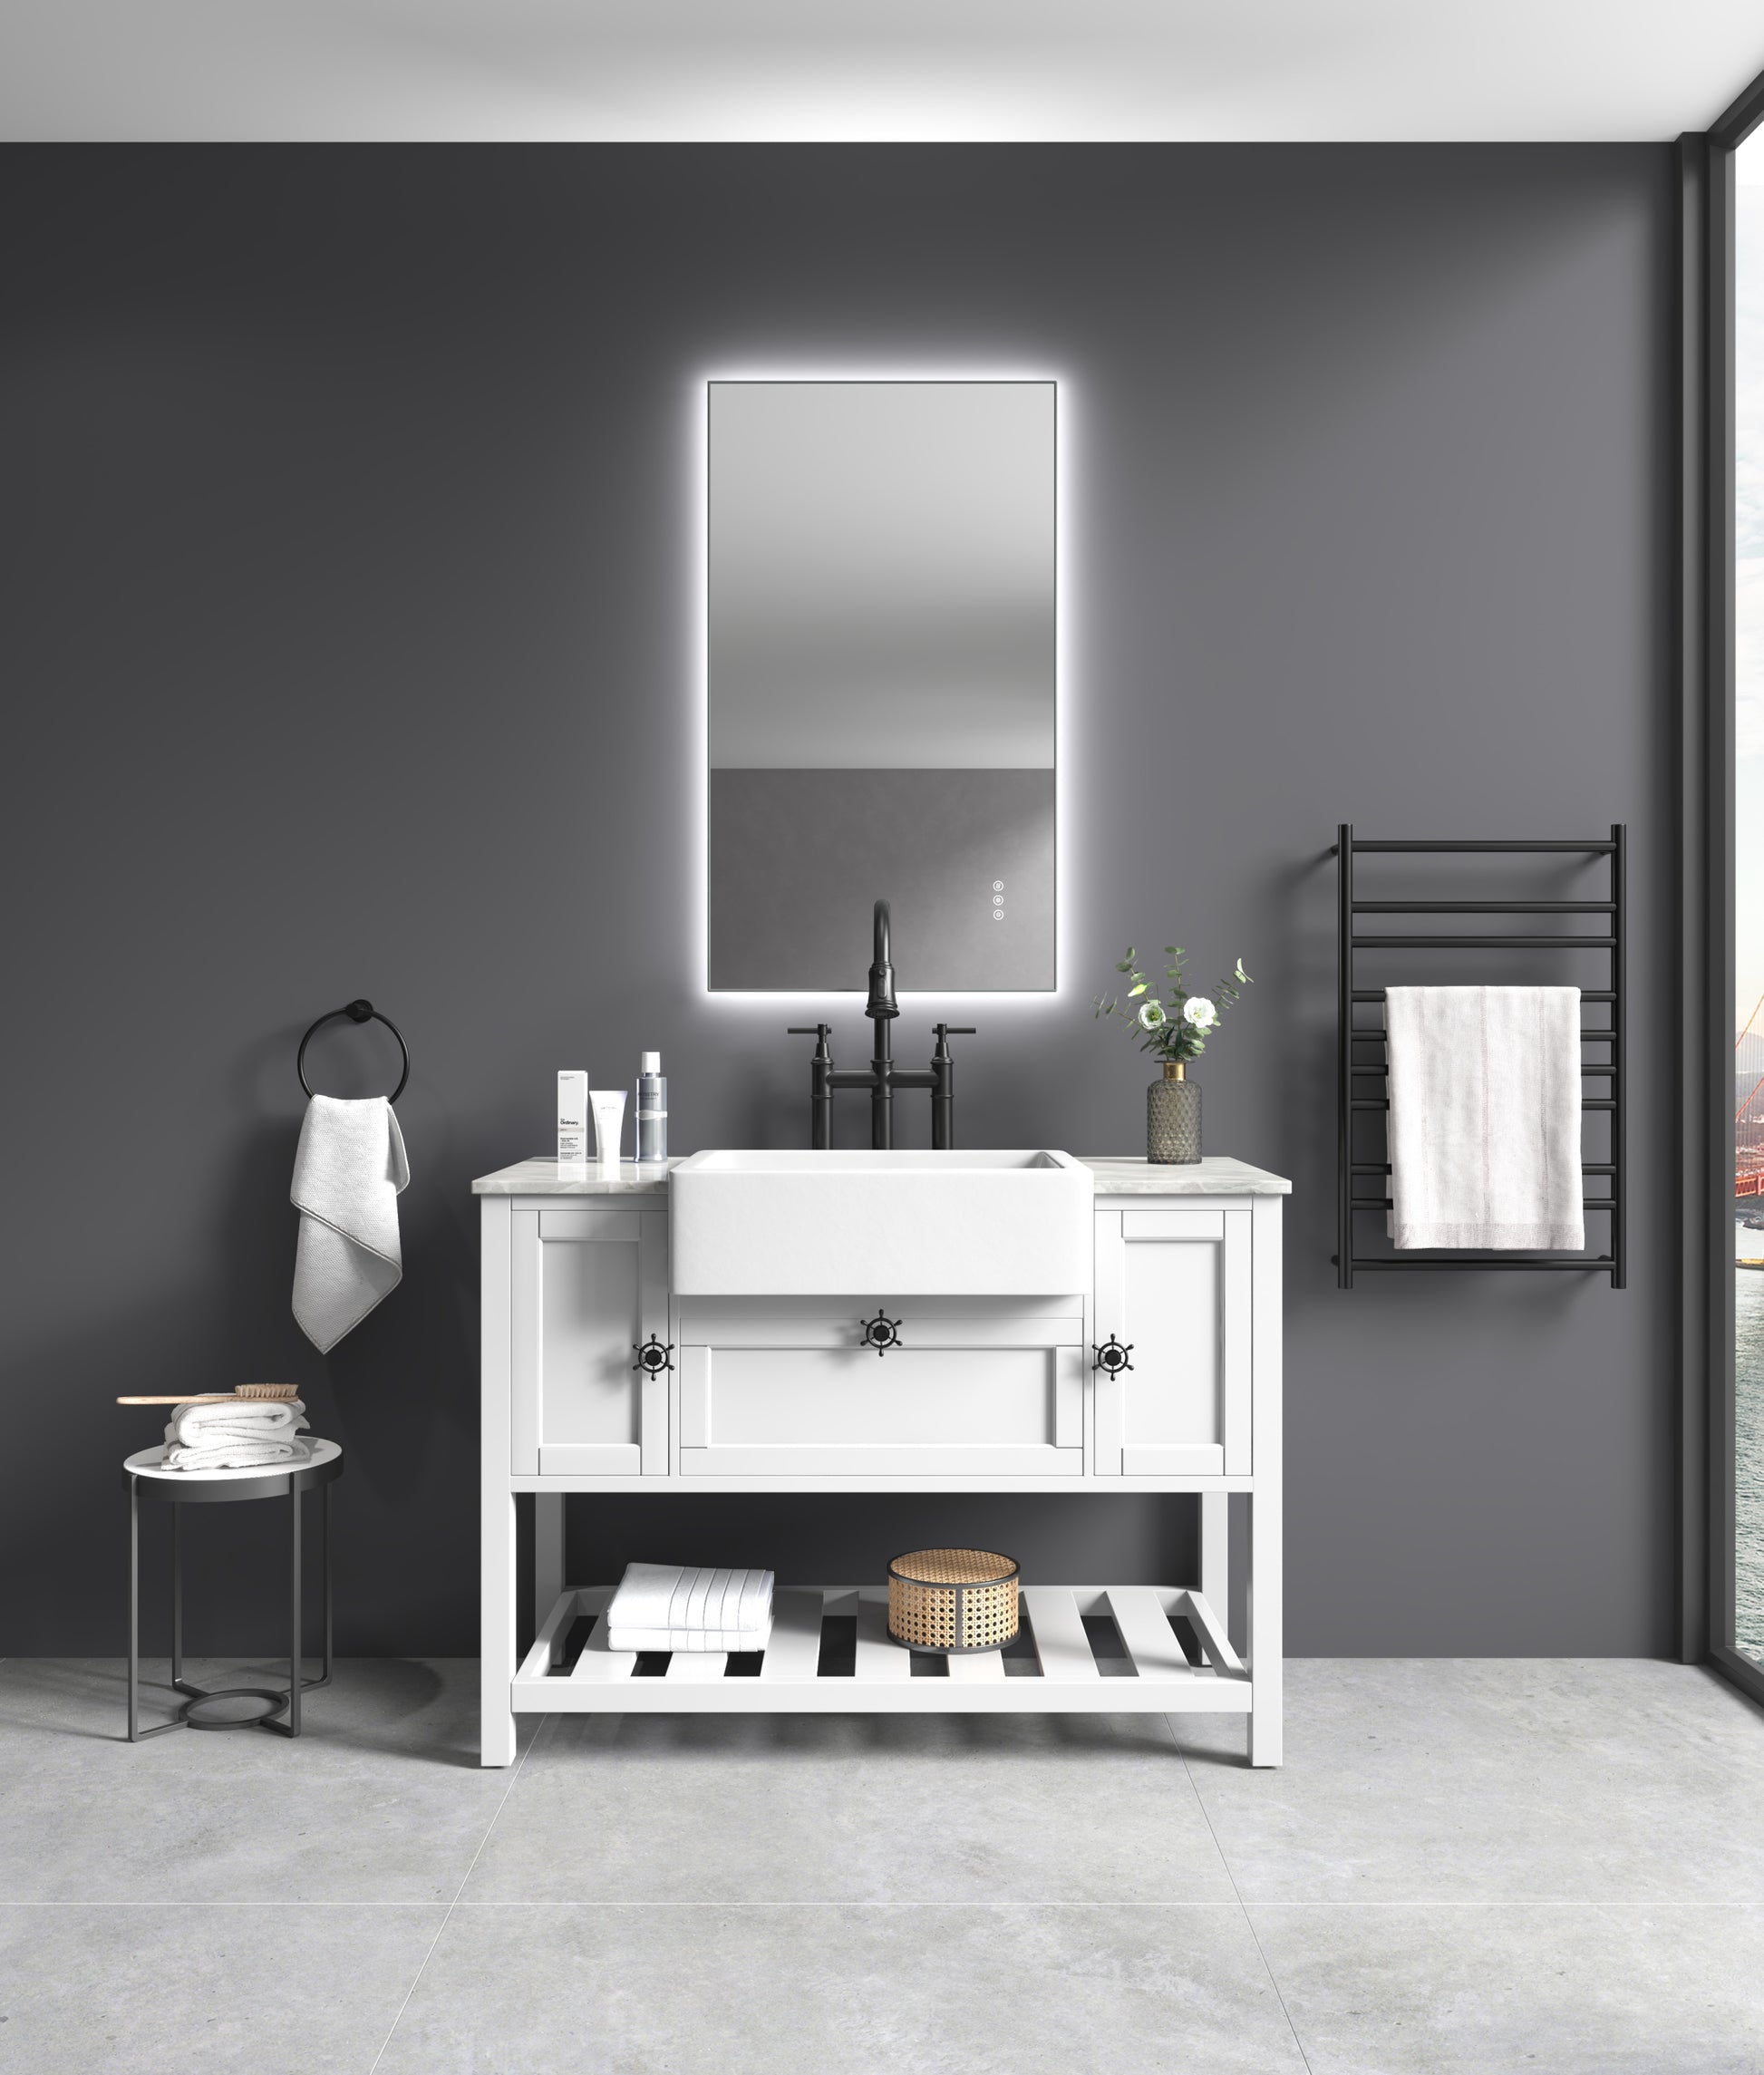 bathroom led mirror is multi functional and each matt black-aluminum